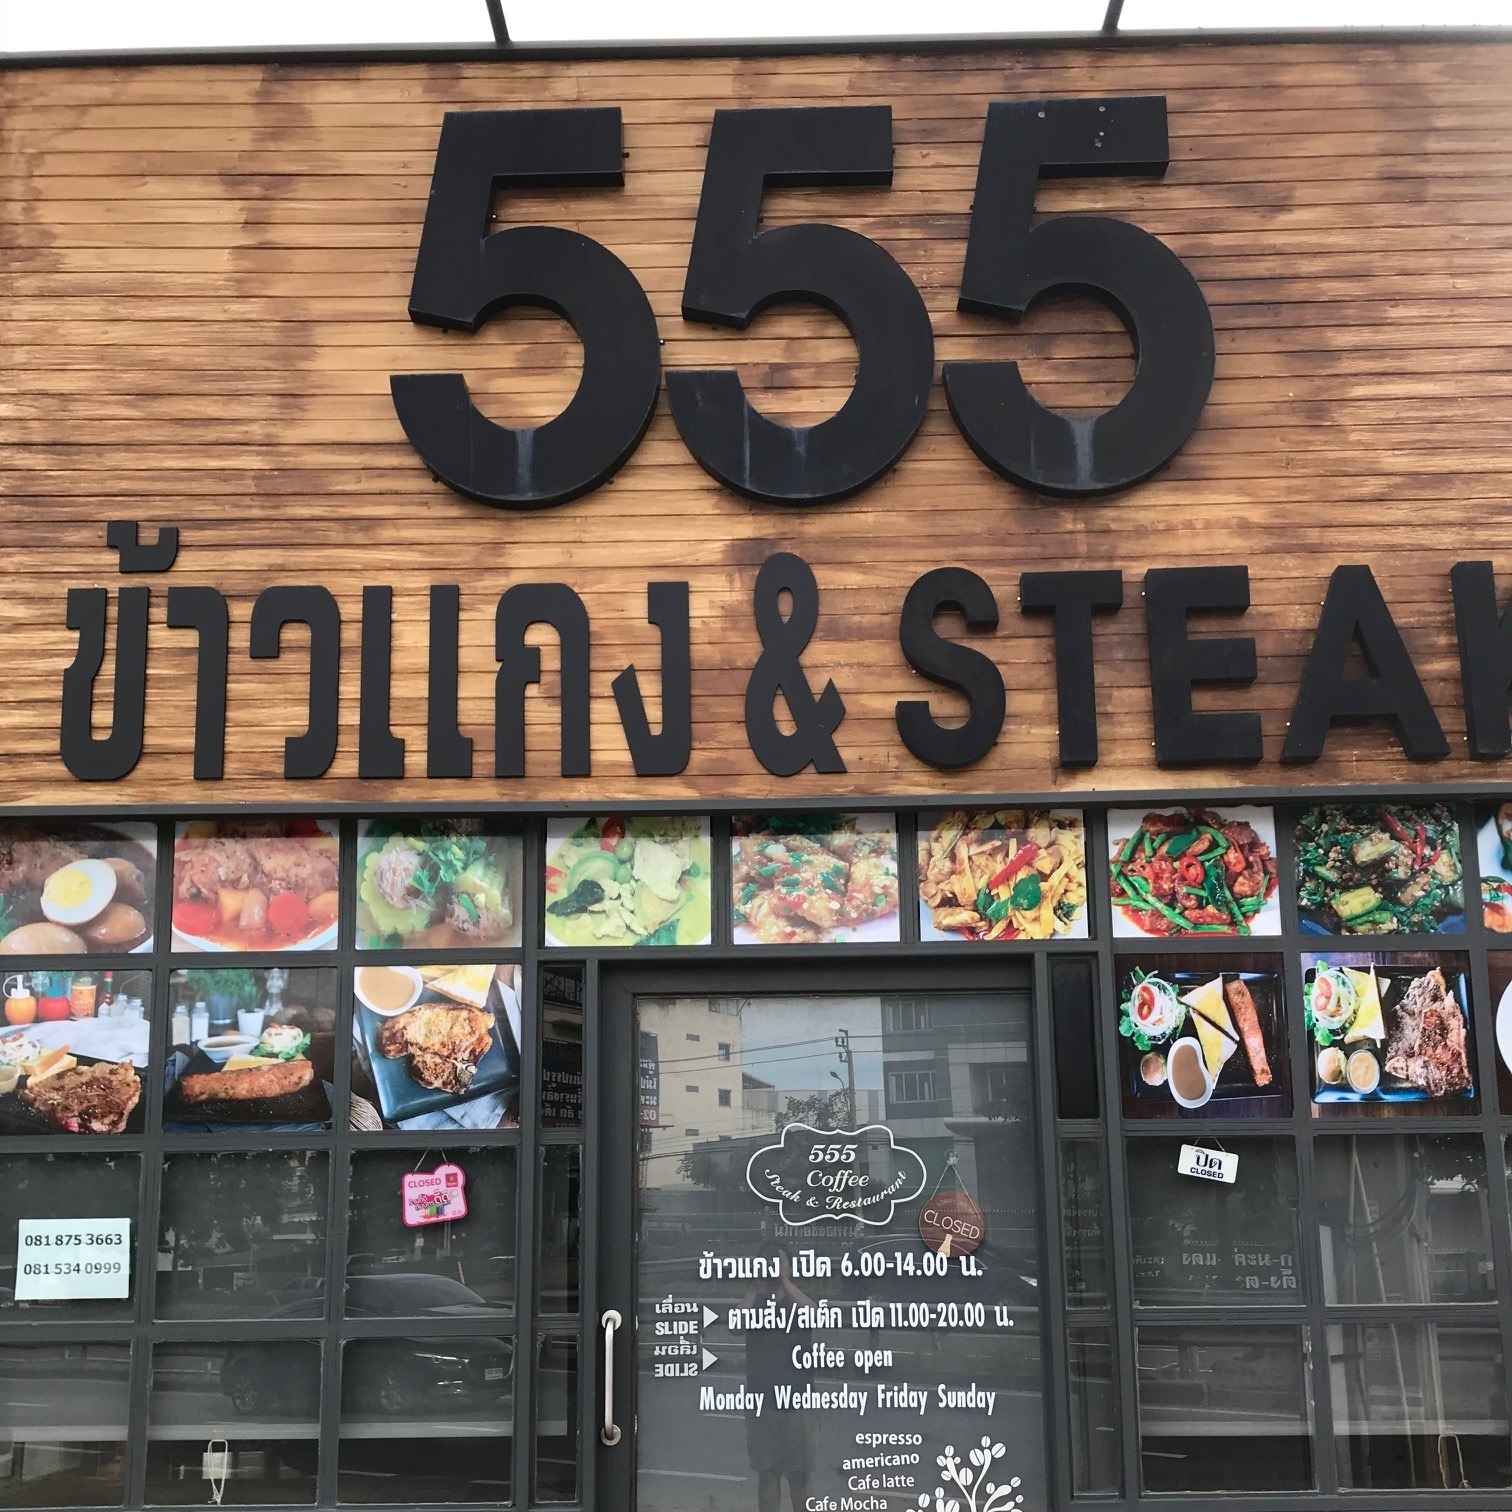 555-steak